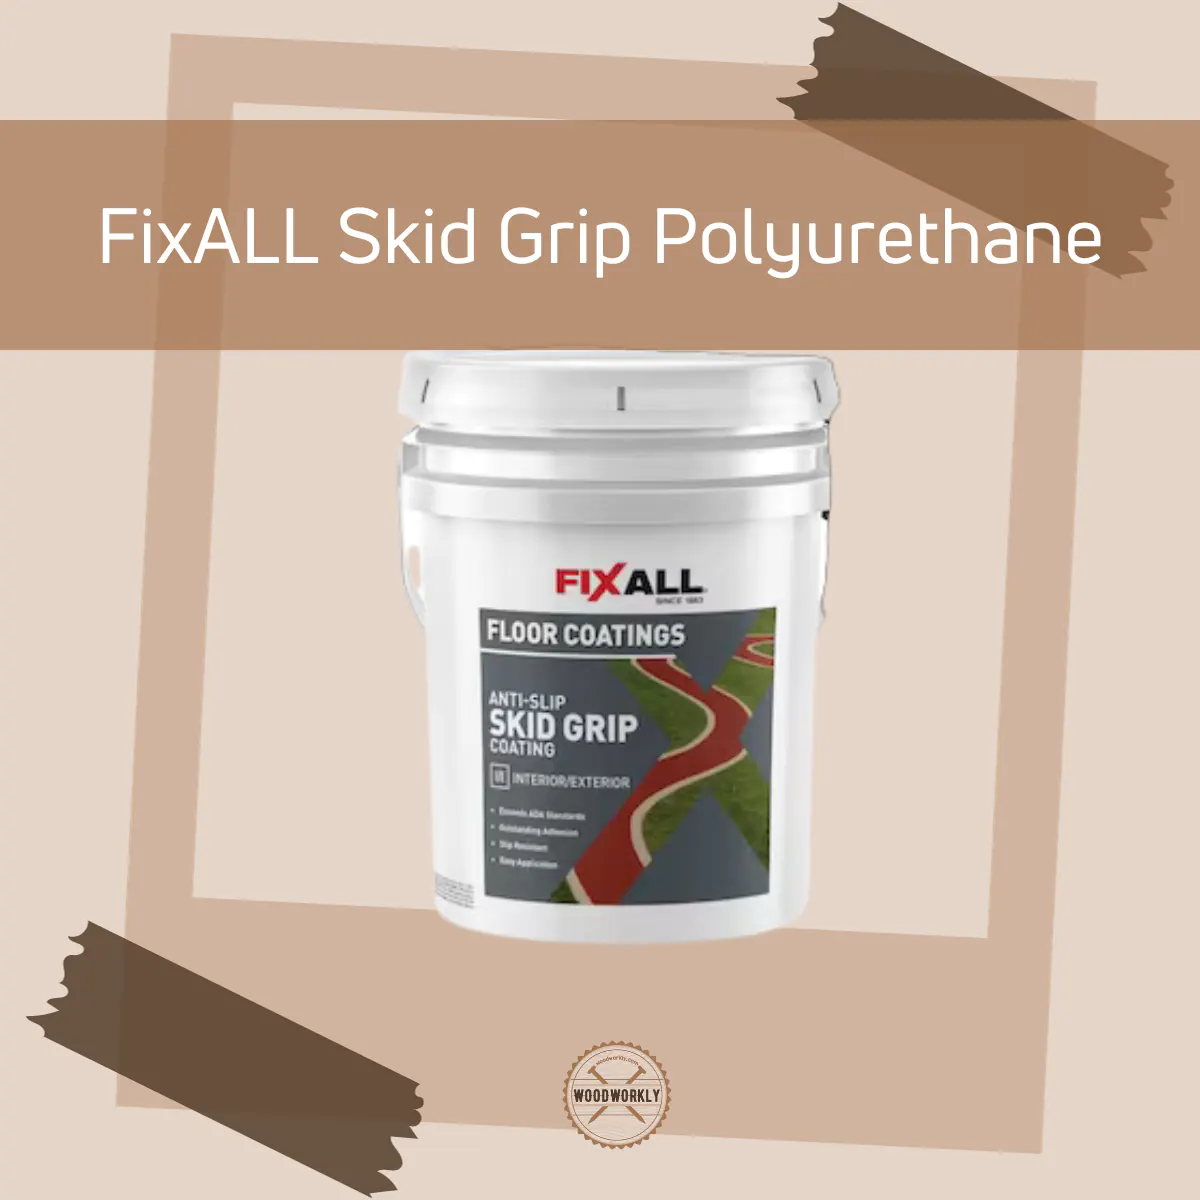 FixALL Skid Grip Polyurethane